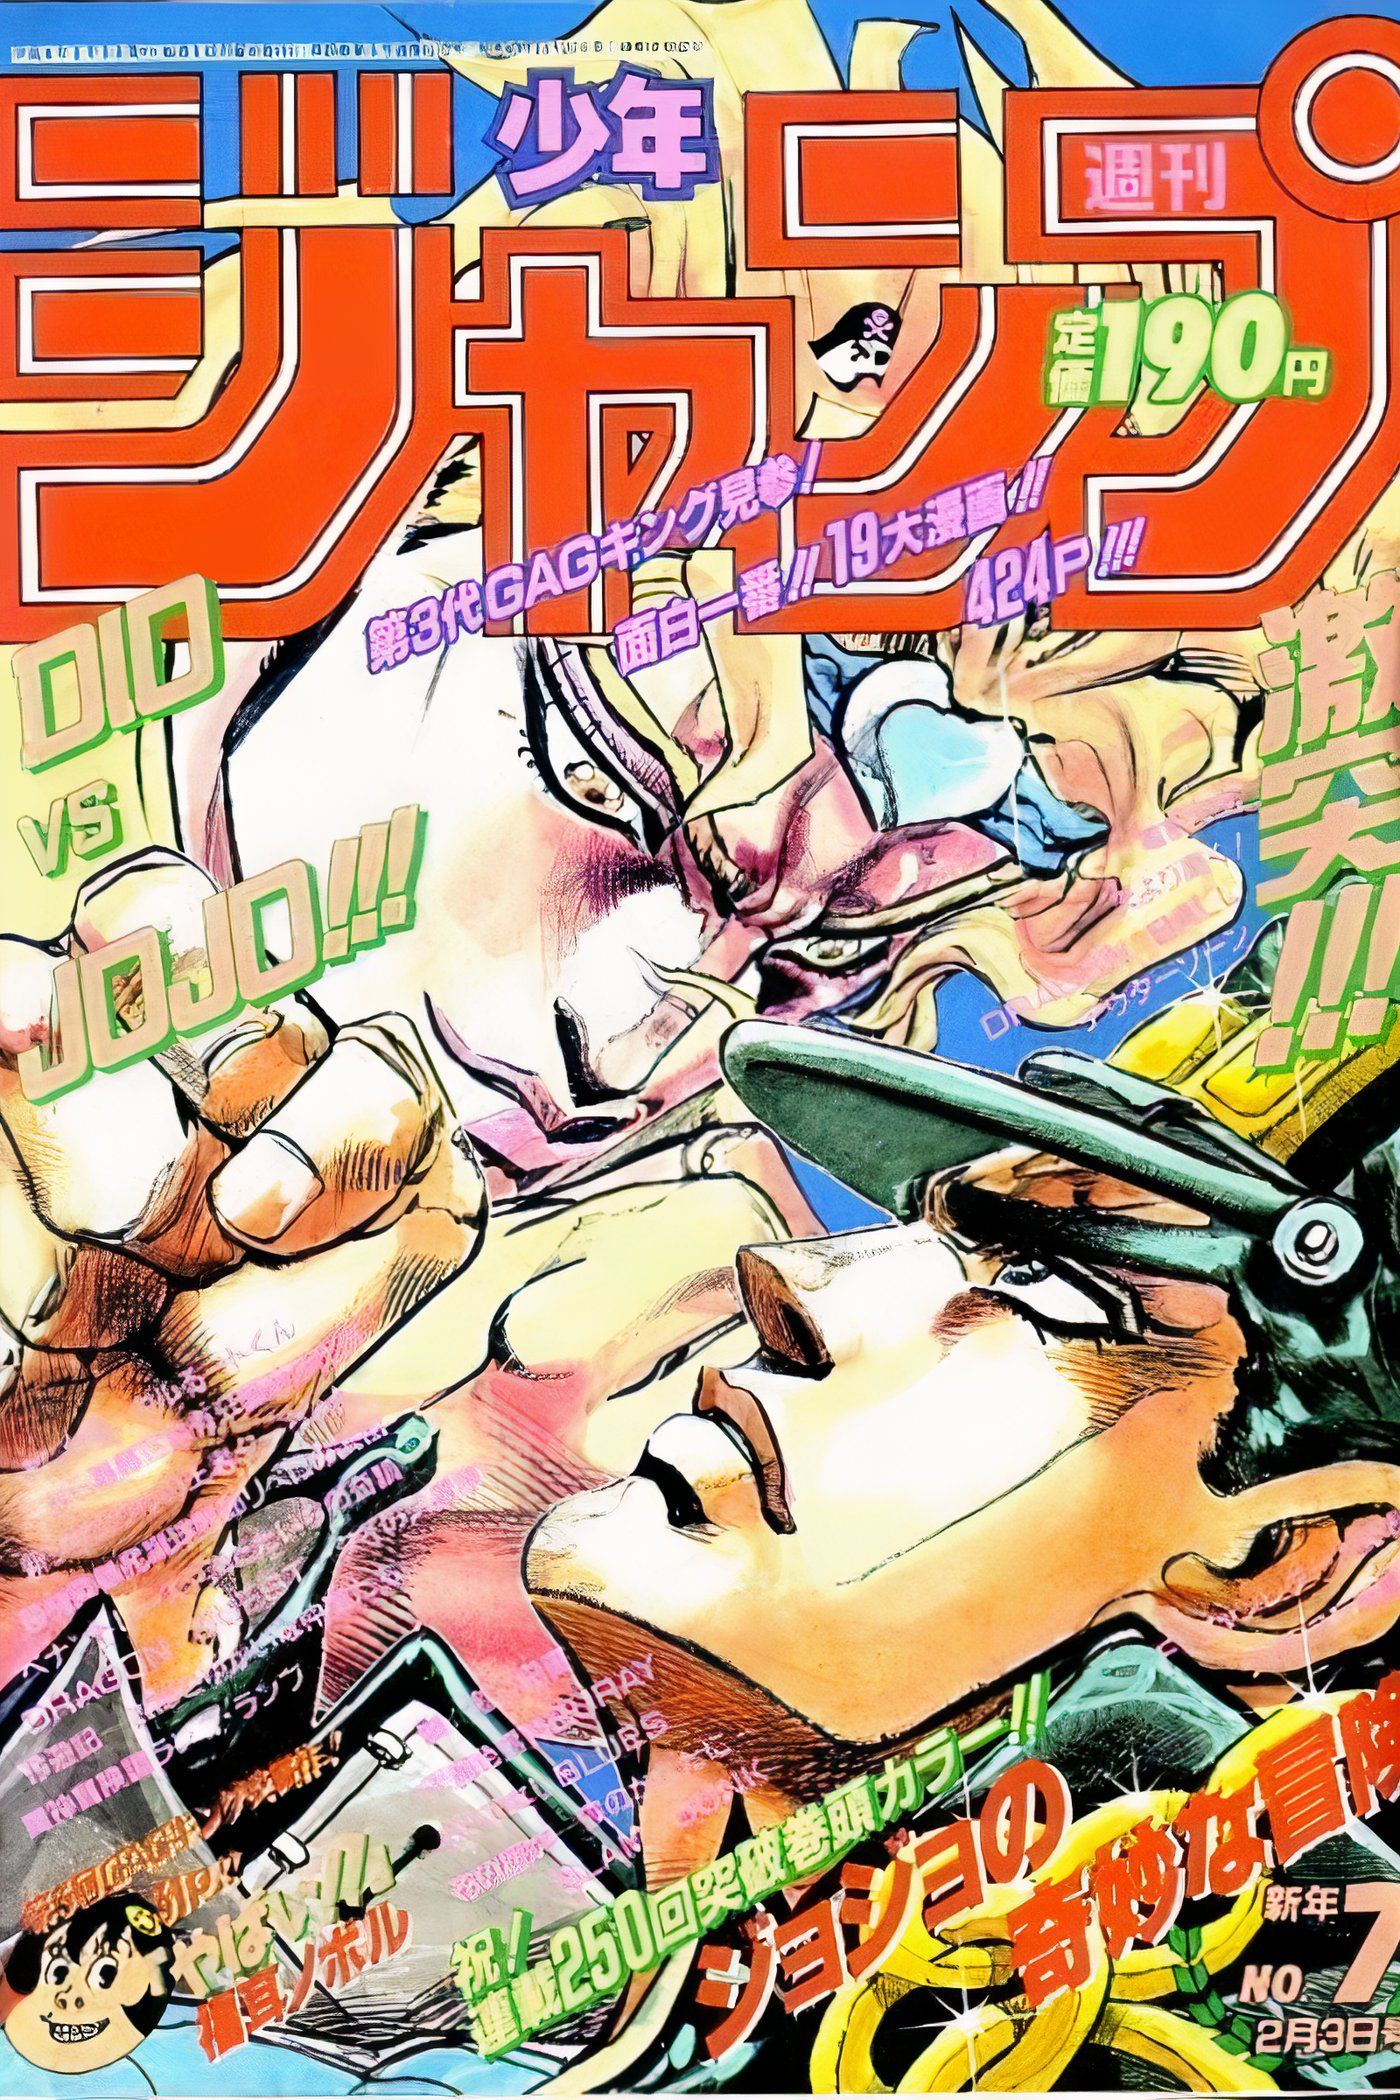 JoJo Weekly Shonen Jump Cover #1192 Dio Brando enfrentando Jotaro Kujo prestes a lutar